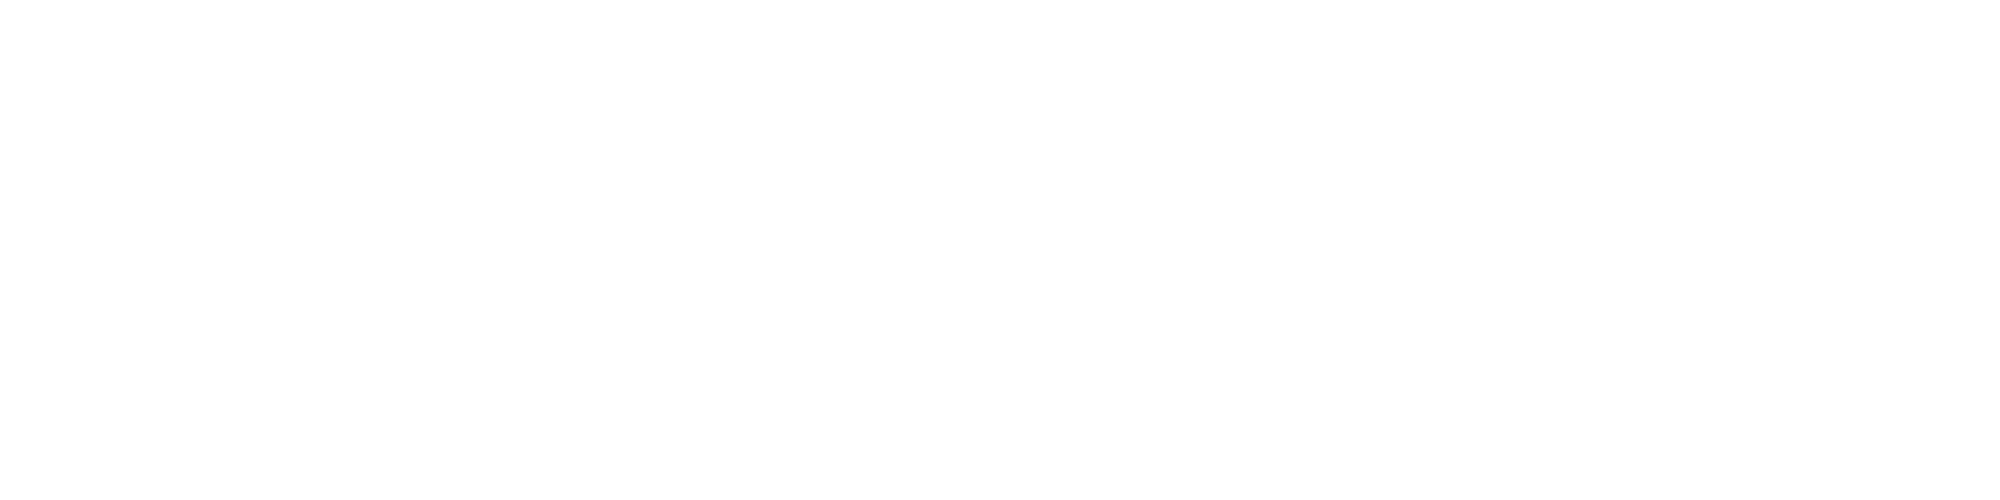 bettdecke logo